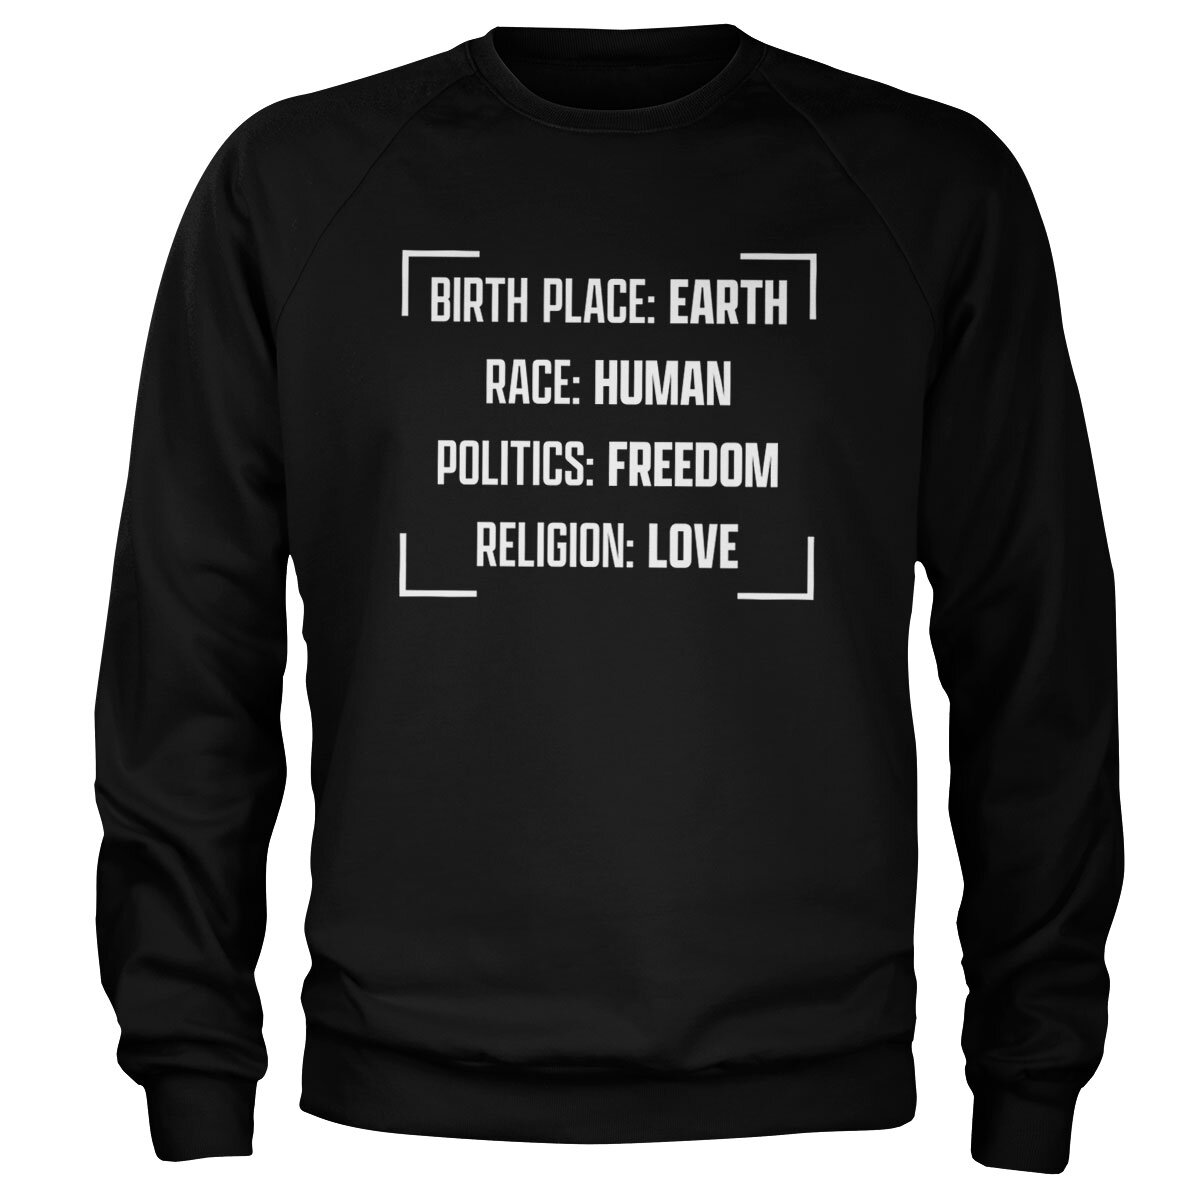 Birthplace - Earth Sweatshirt